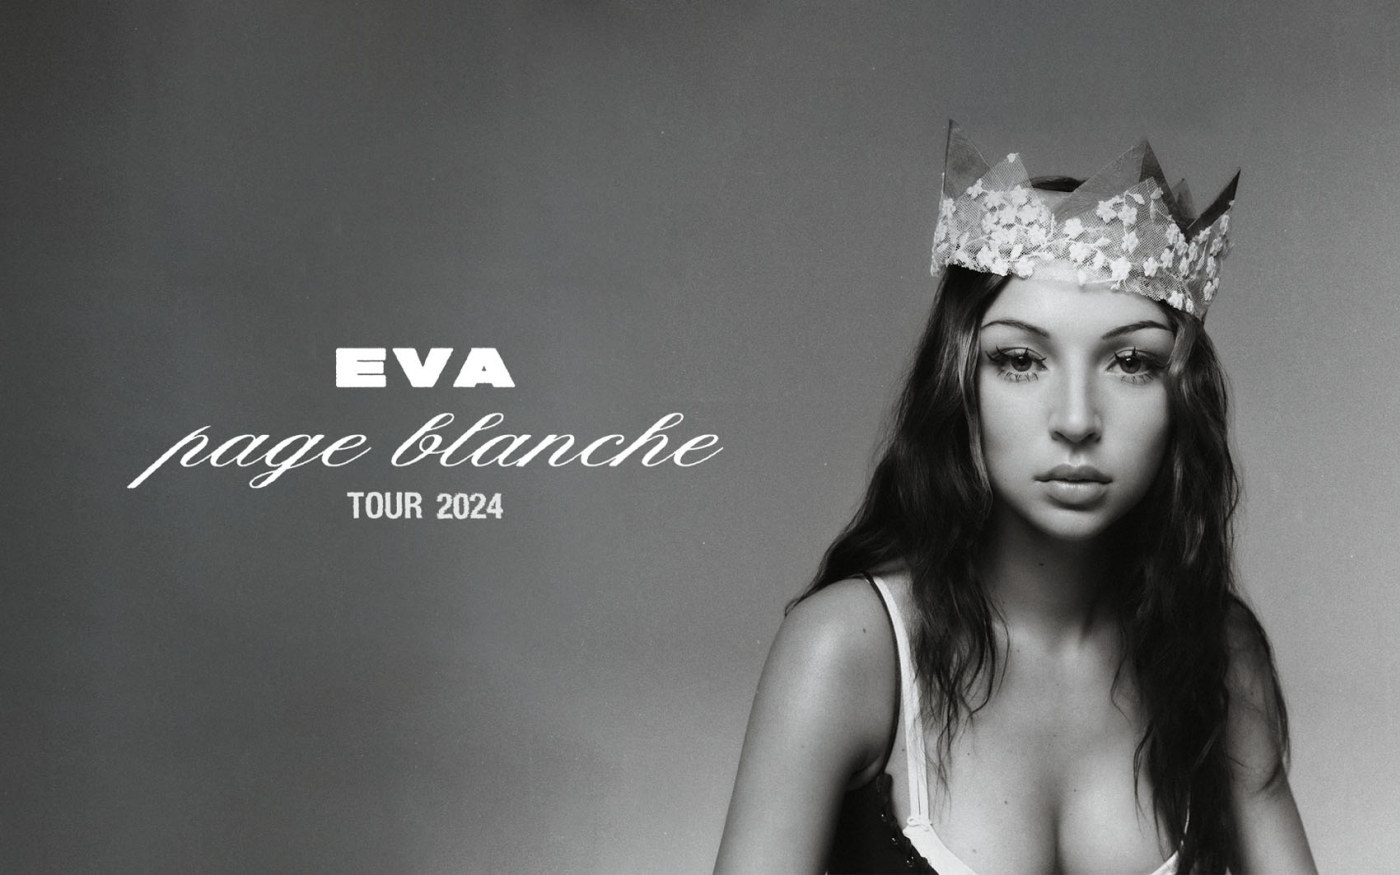 Eva - page blanche tour 2024